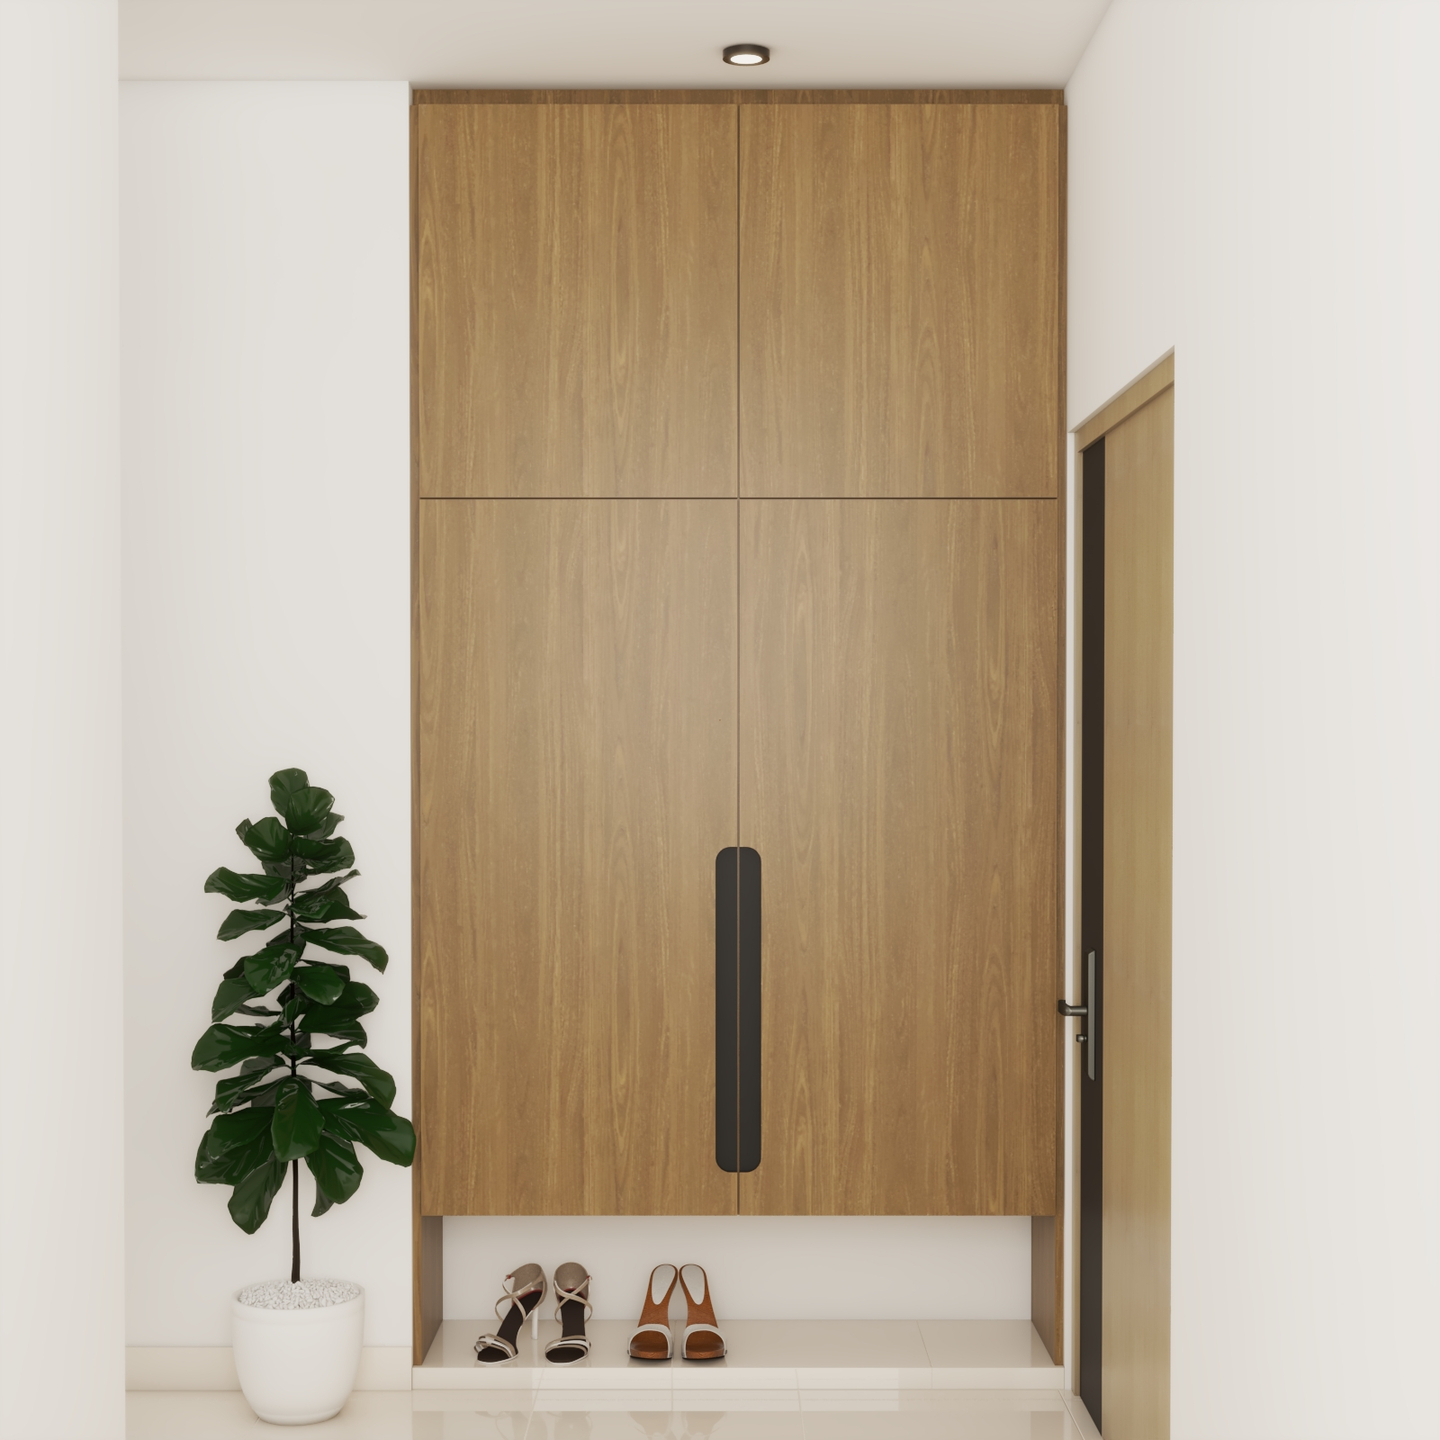 Compact Foyer Design - Livspace